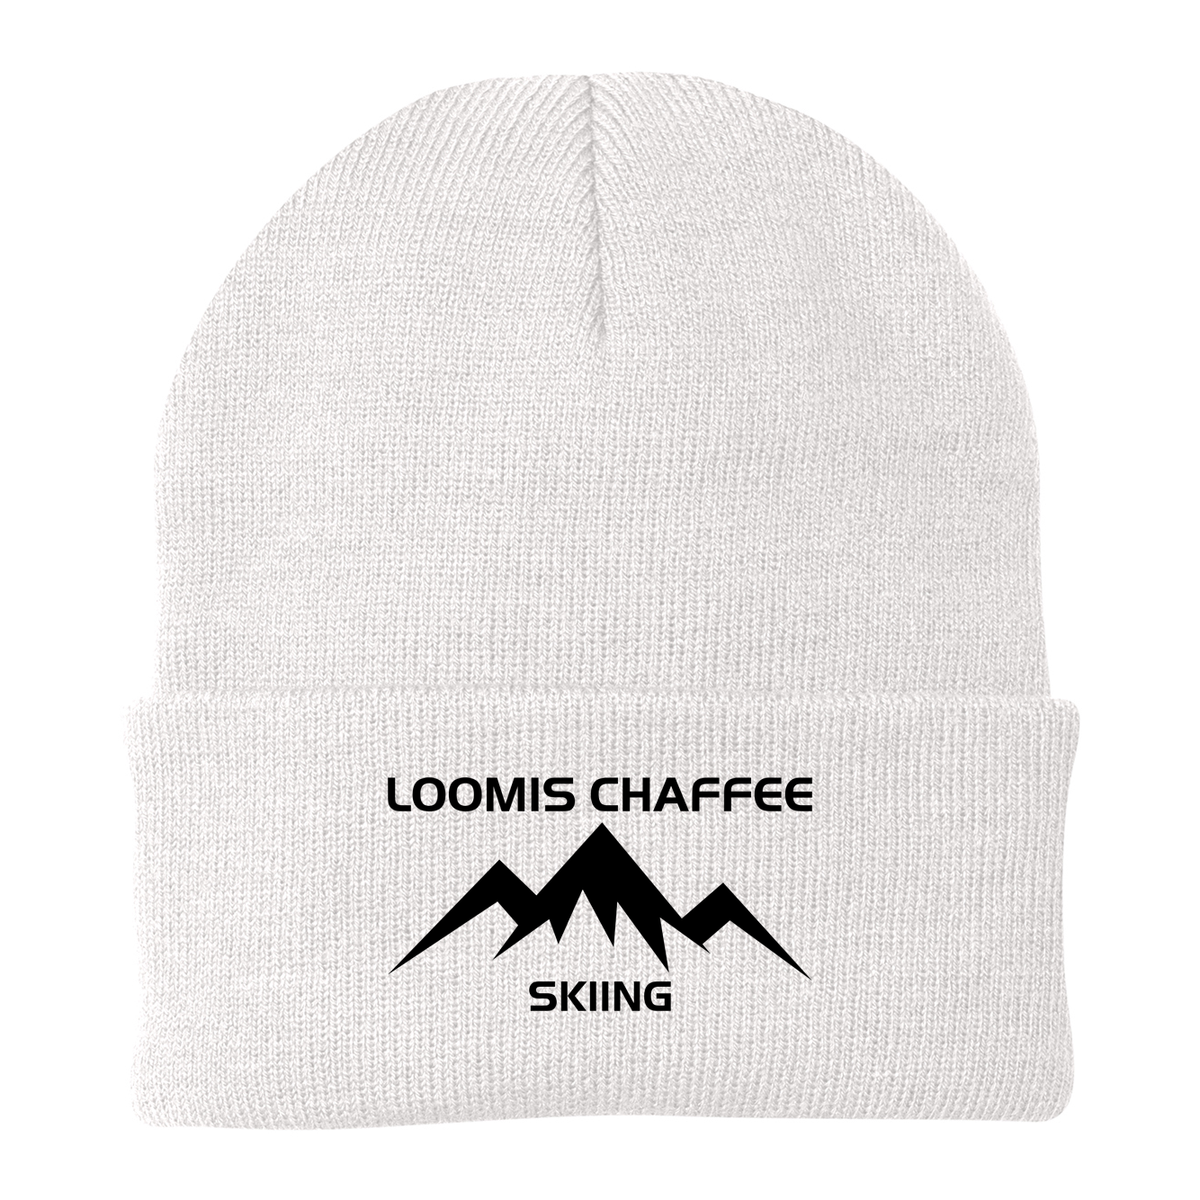 Loomis Chaffee Ski Team Knit Beanie